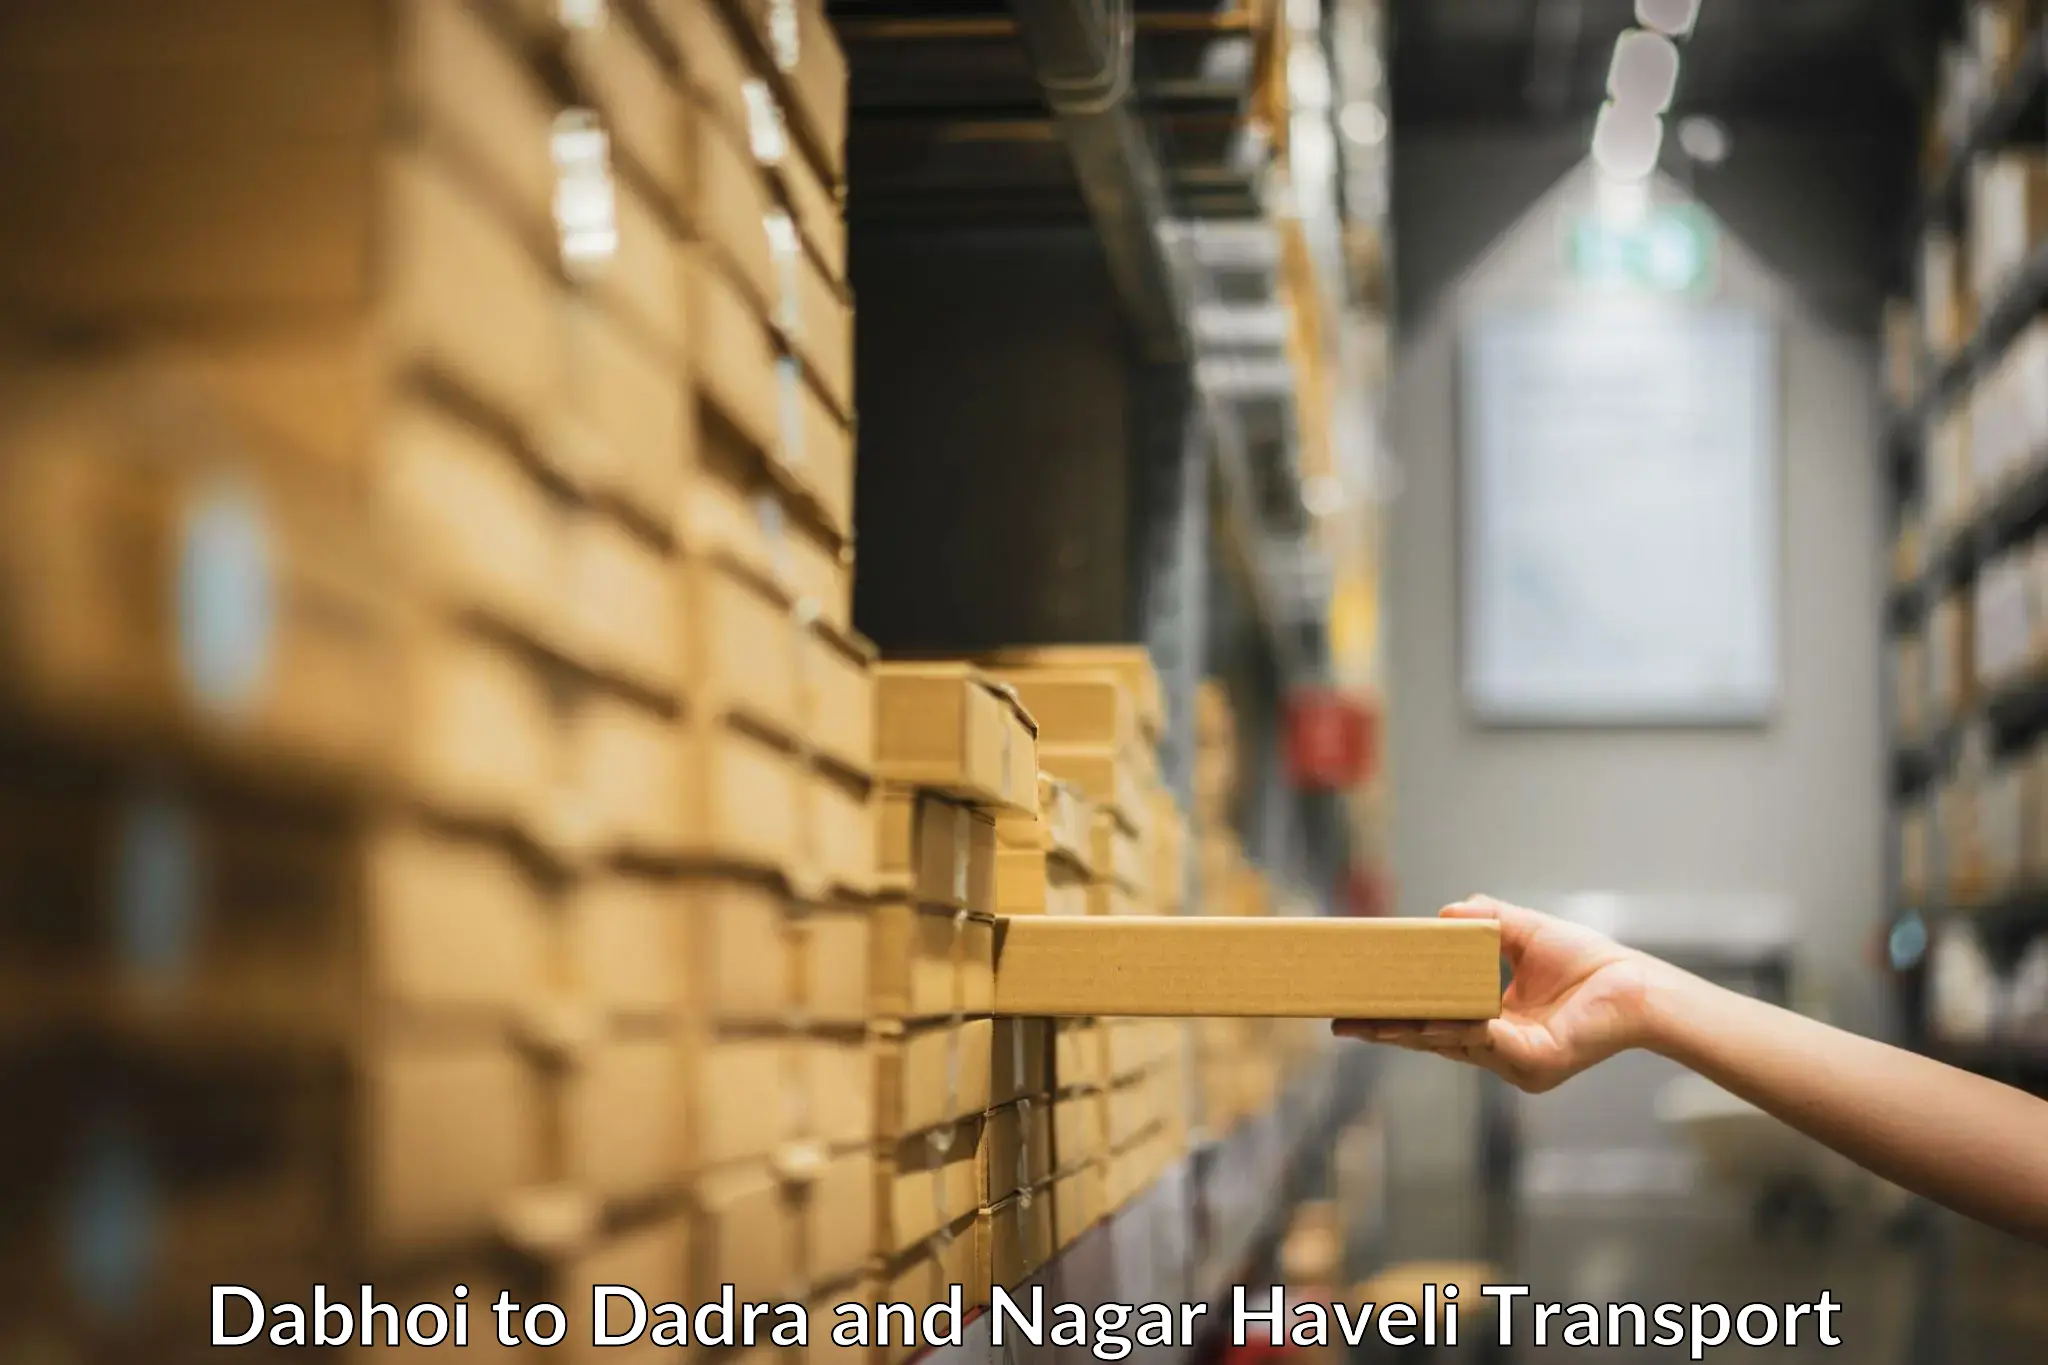 Online transport service Dabhoi to Dadra and Nagar Haveli